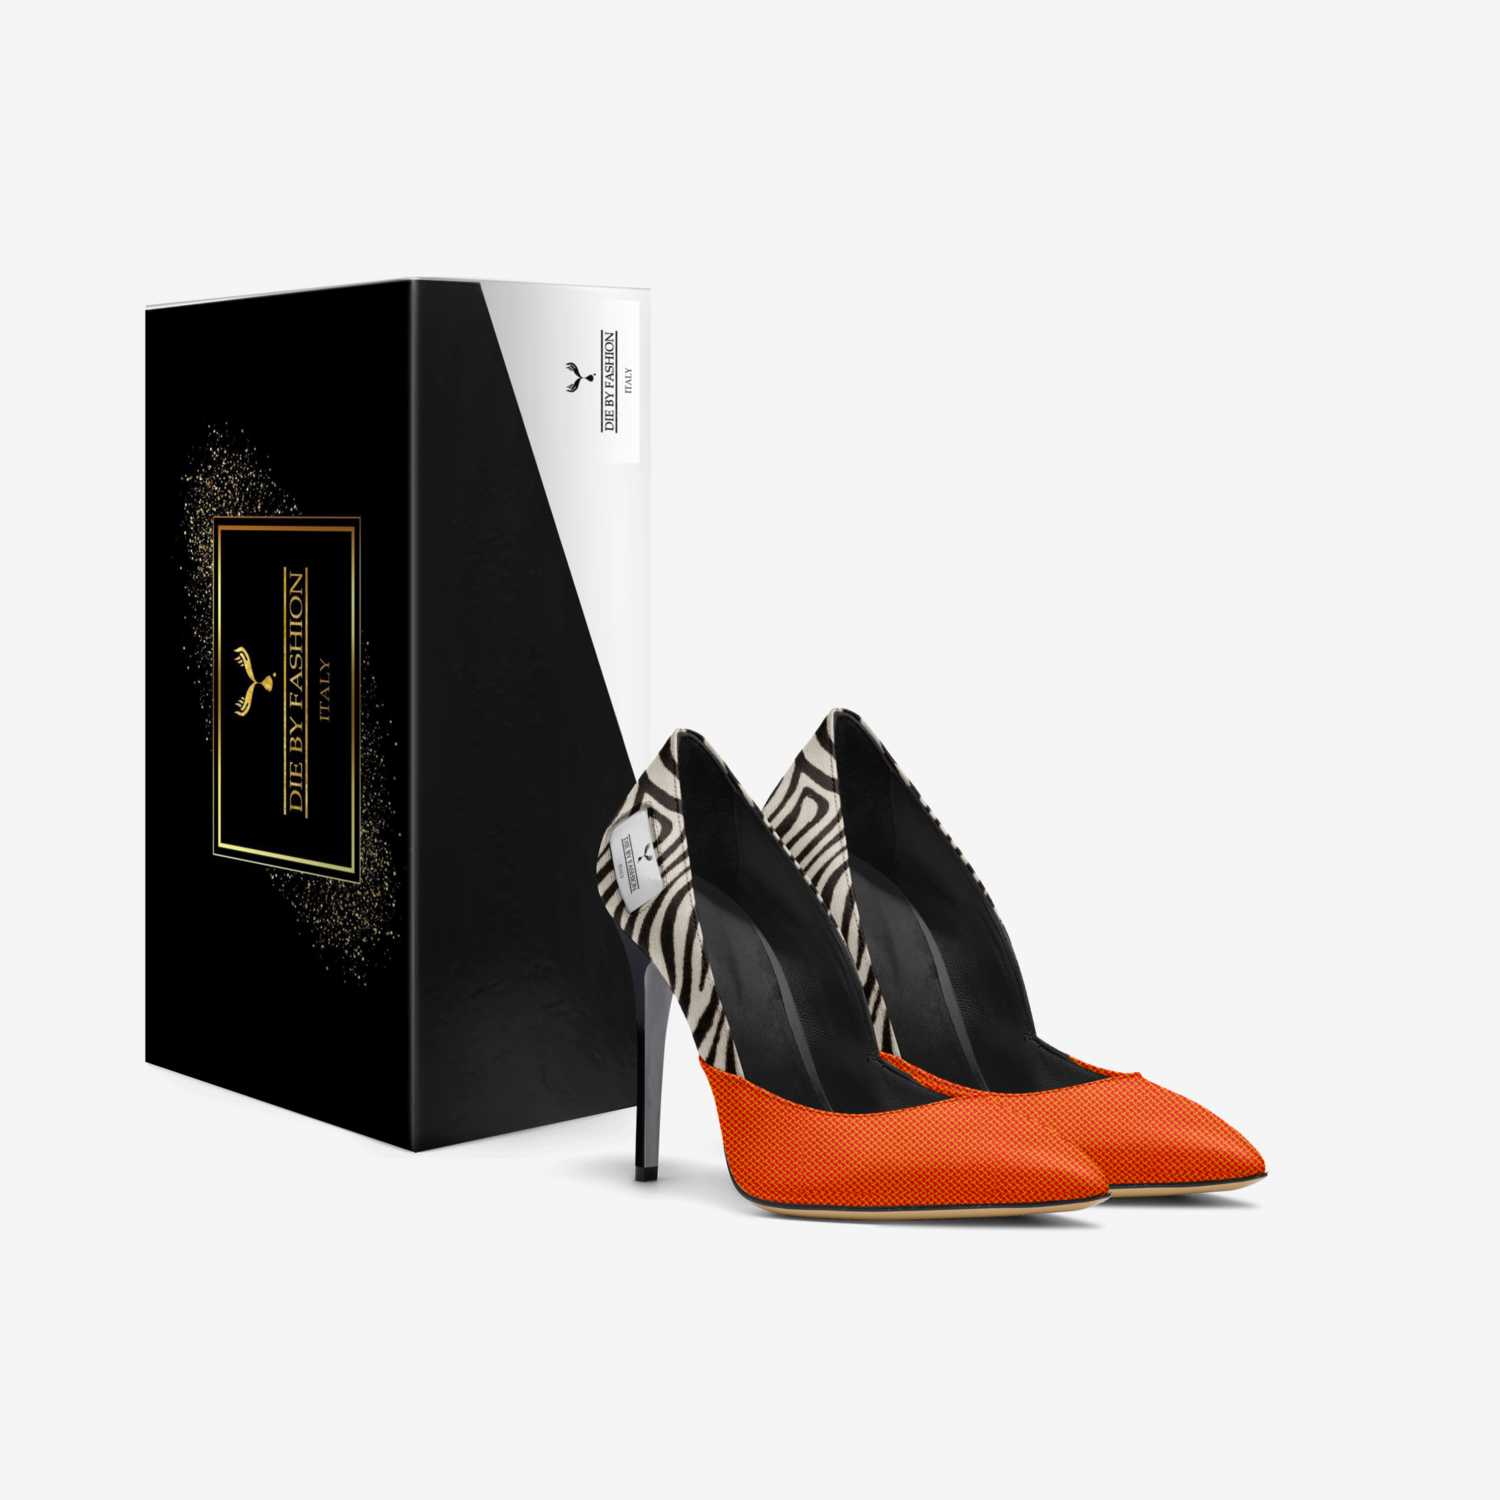 Summerset custom made in Italy shoes by Rasheeda Socolove | Box view